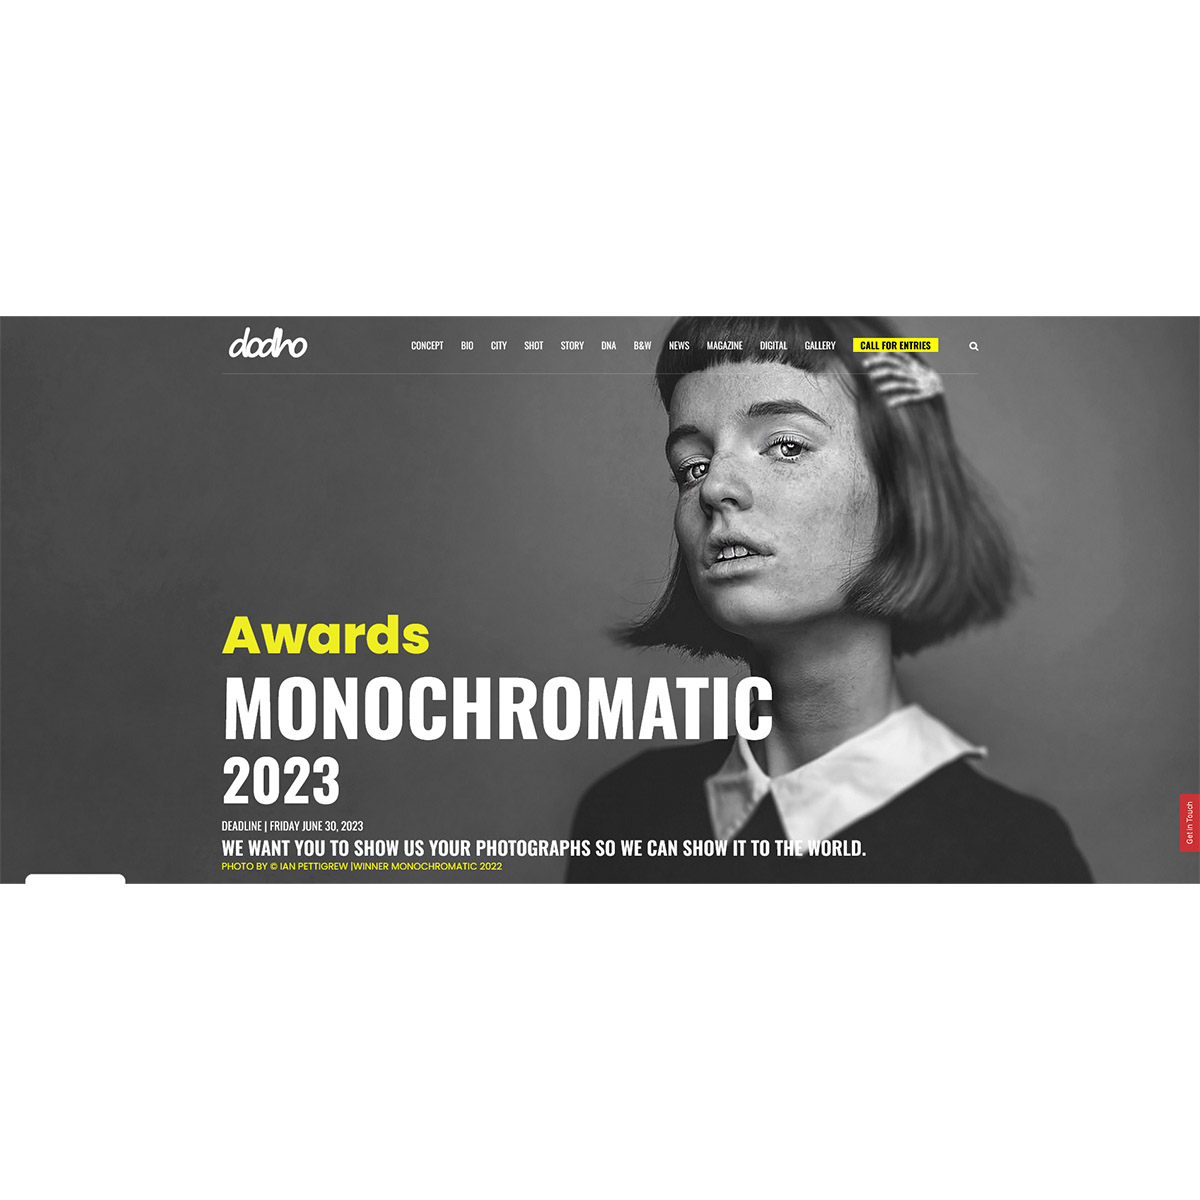 Monochromatic Awards 2023